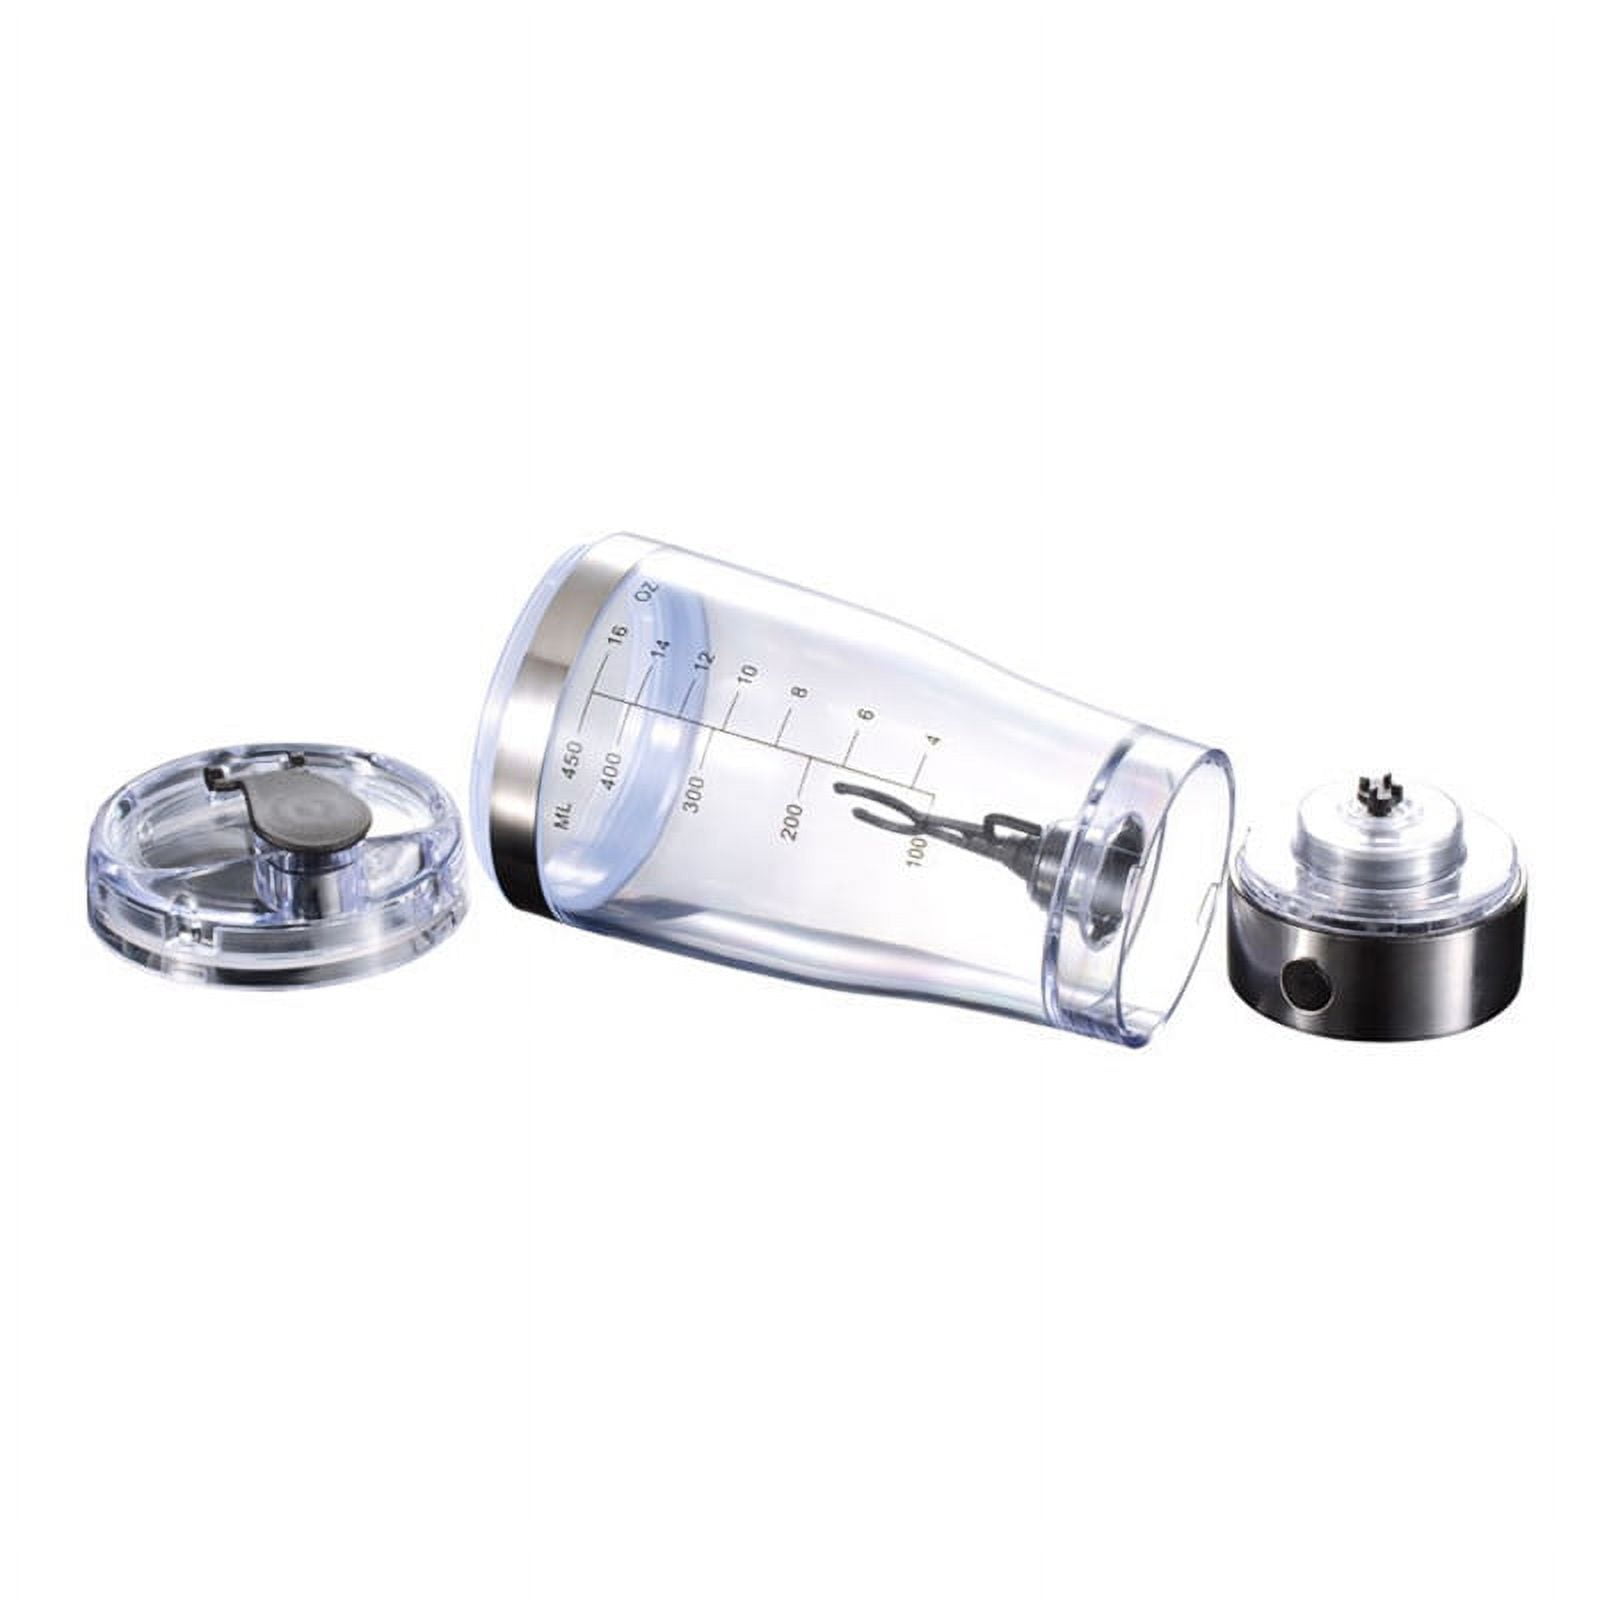 NuWISK: Electric Protein Shaker Bottle: Rechargeable Blender